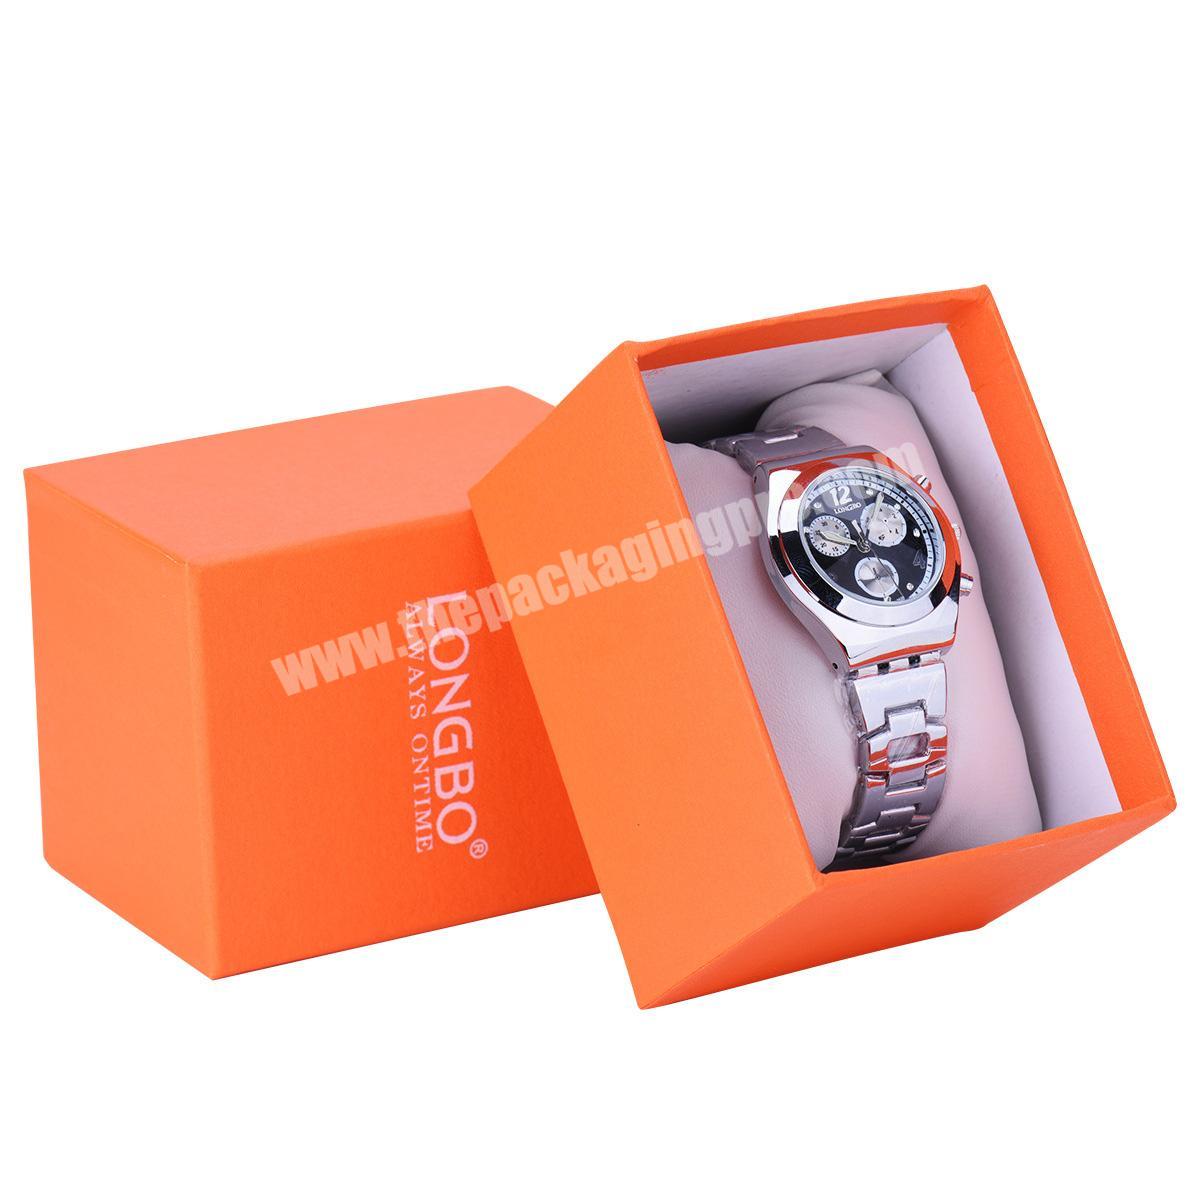 Most Popular cardboard watch box watch box luxury watch packaging box in low price